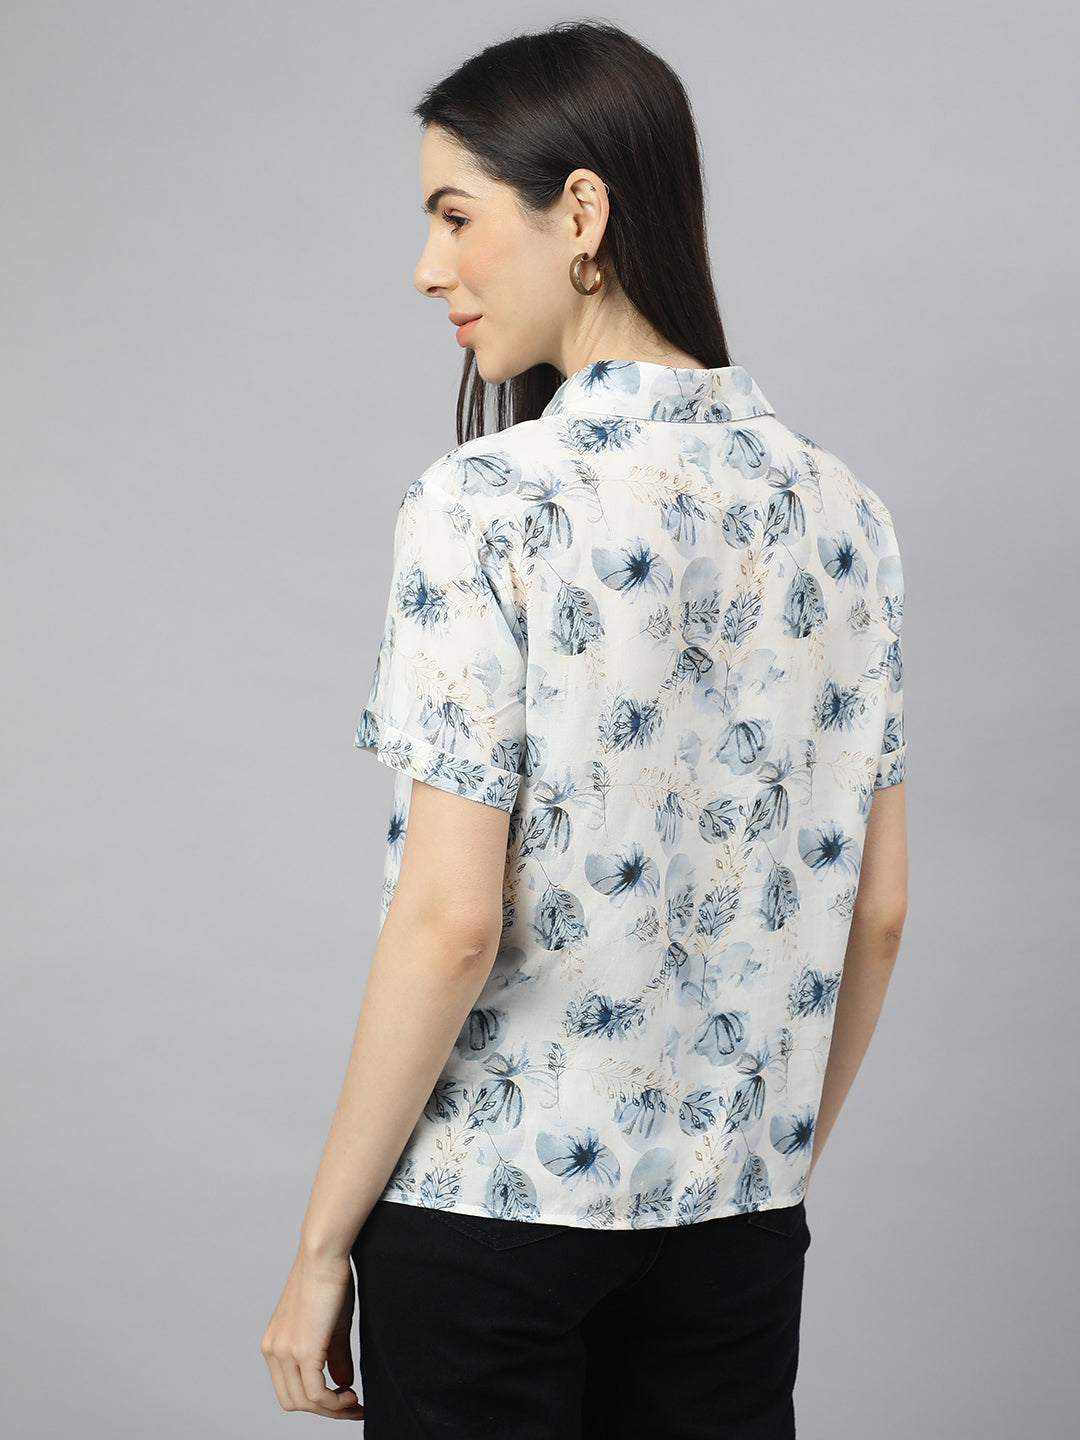 Valbone Women’s White Modal Silk Floral Printed Shirt Half Sleeves